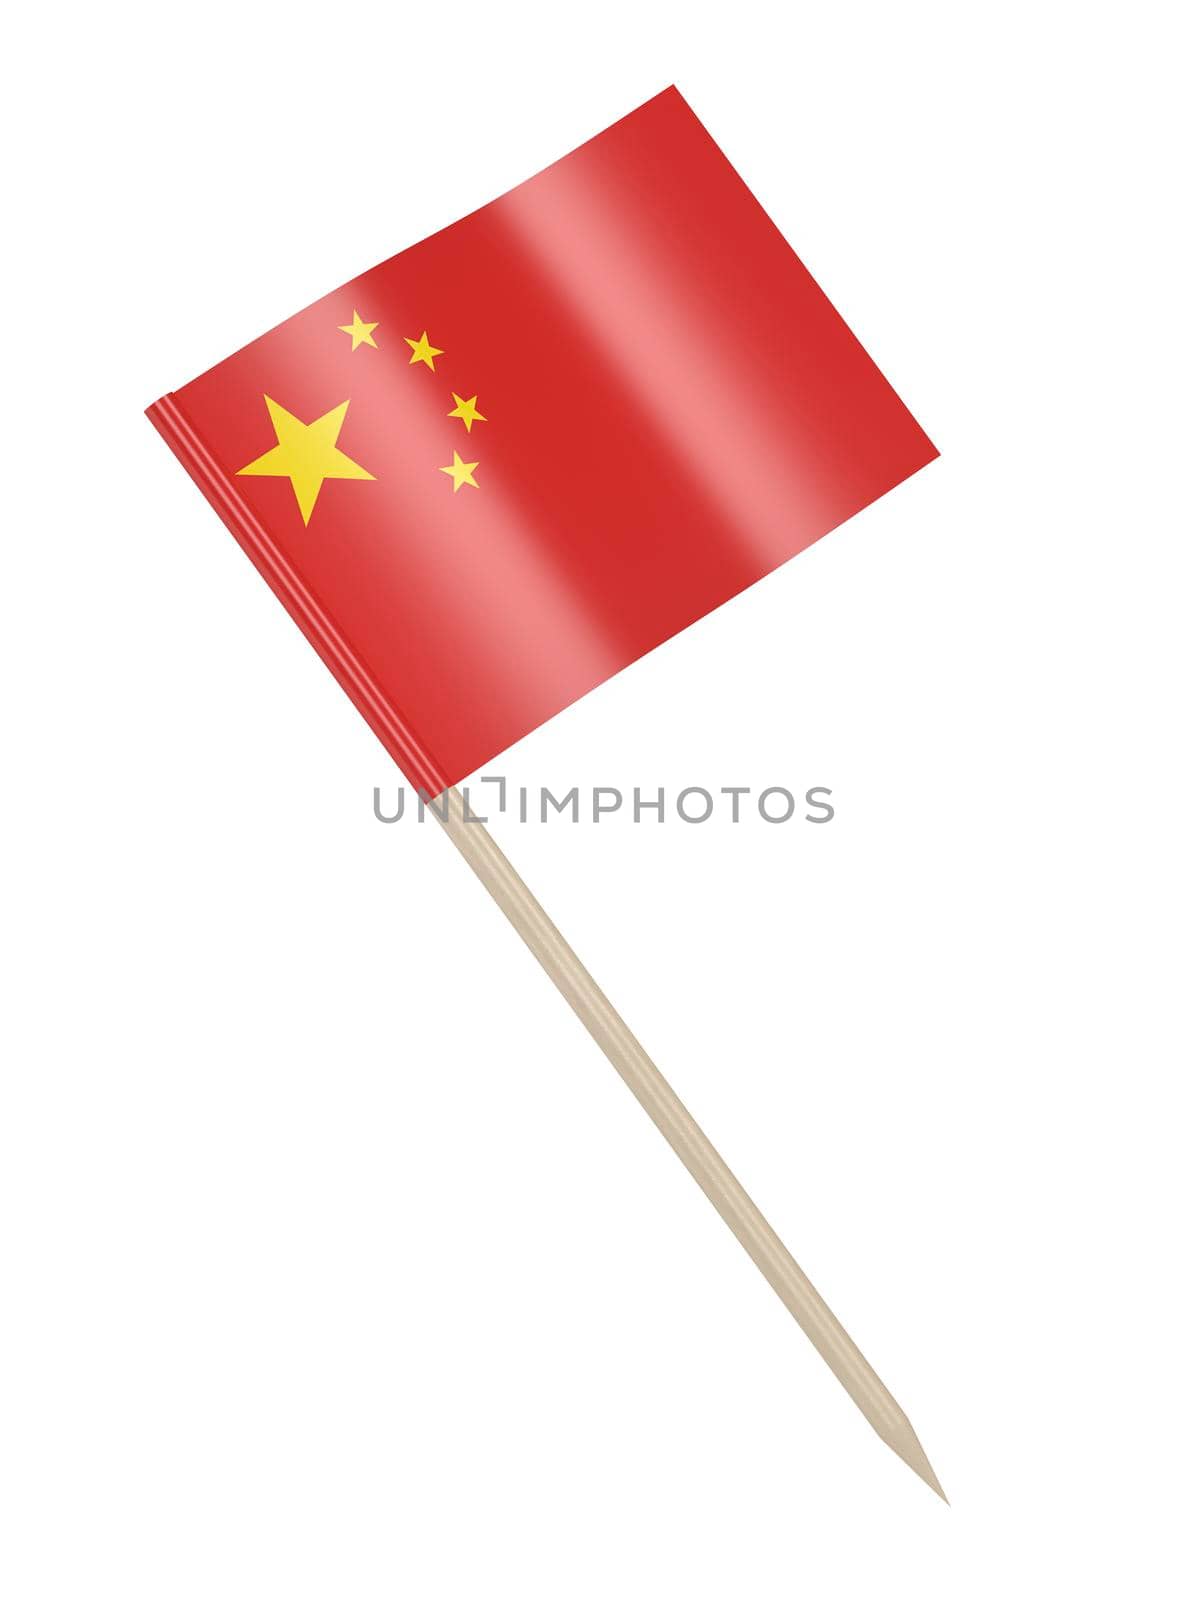 Chinese flag toothpick isolated on white background